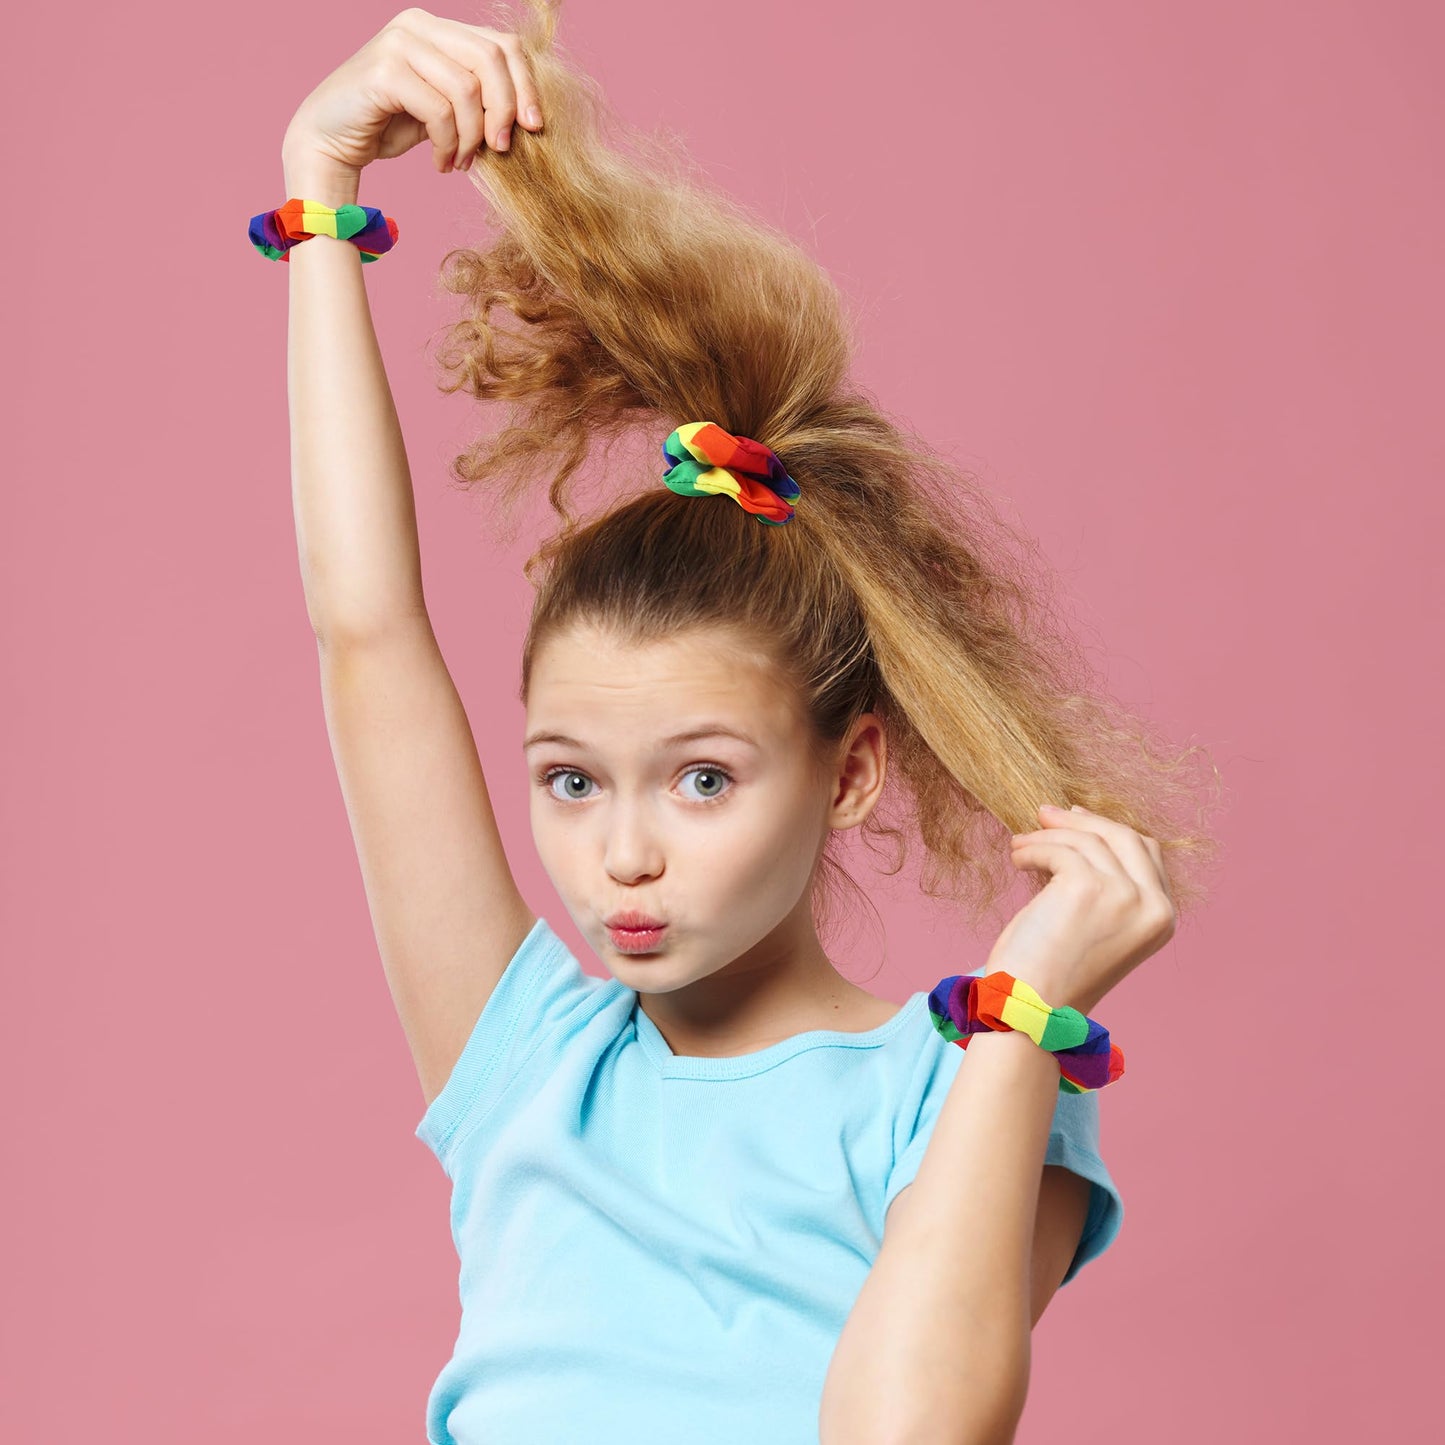 8 Pcs Pride Rainbow Hair Scrunchies- LGBT Rainbow Hair Ring Hair Ties- Elastic Striped Rainbow Ponytail Holder for Women Girls Hair Accessories